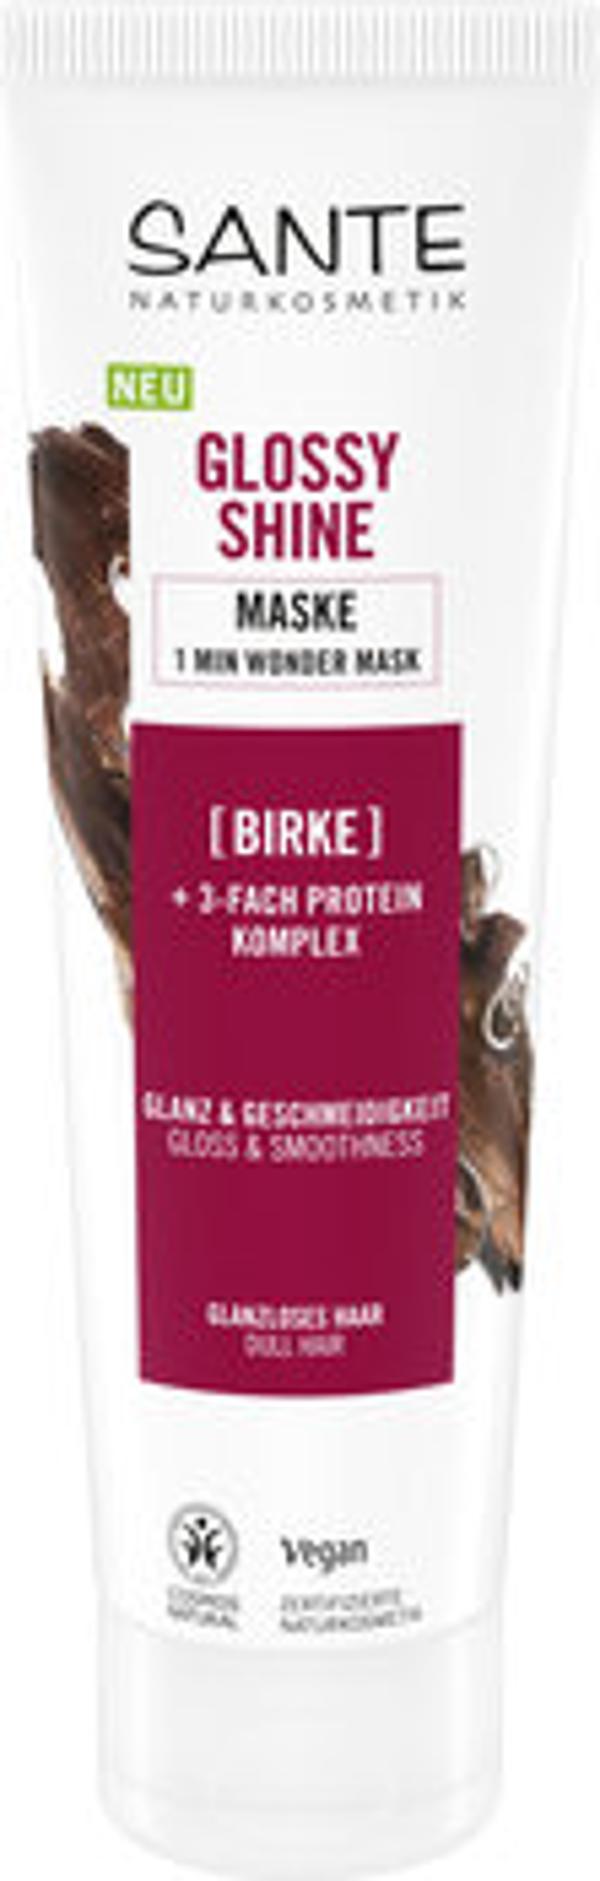 Produktfoto zu Glossy Shine Haarmaske Birke 150ml